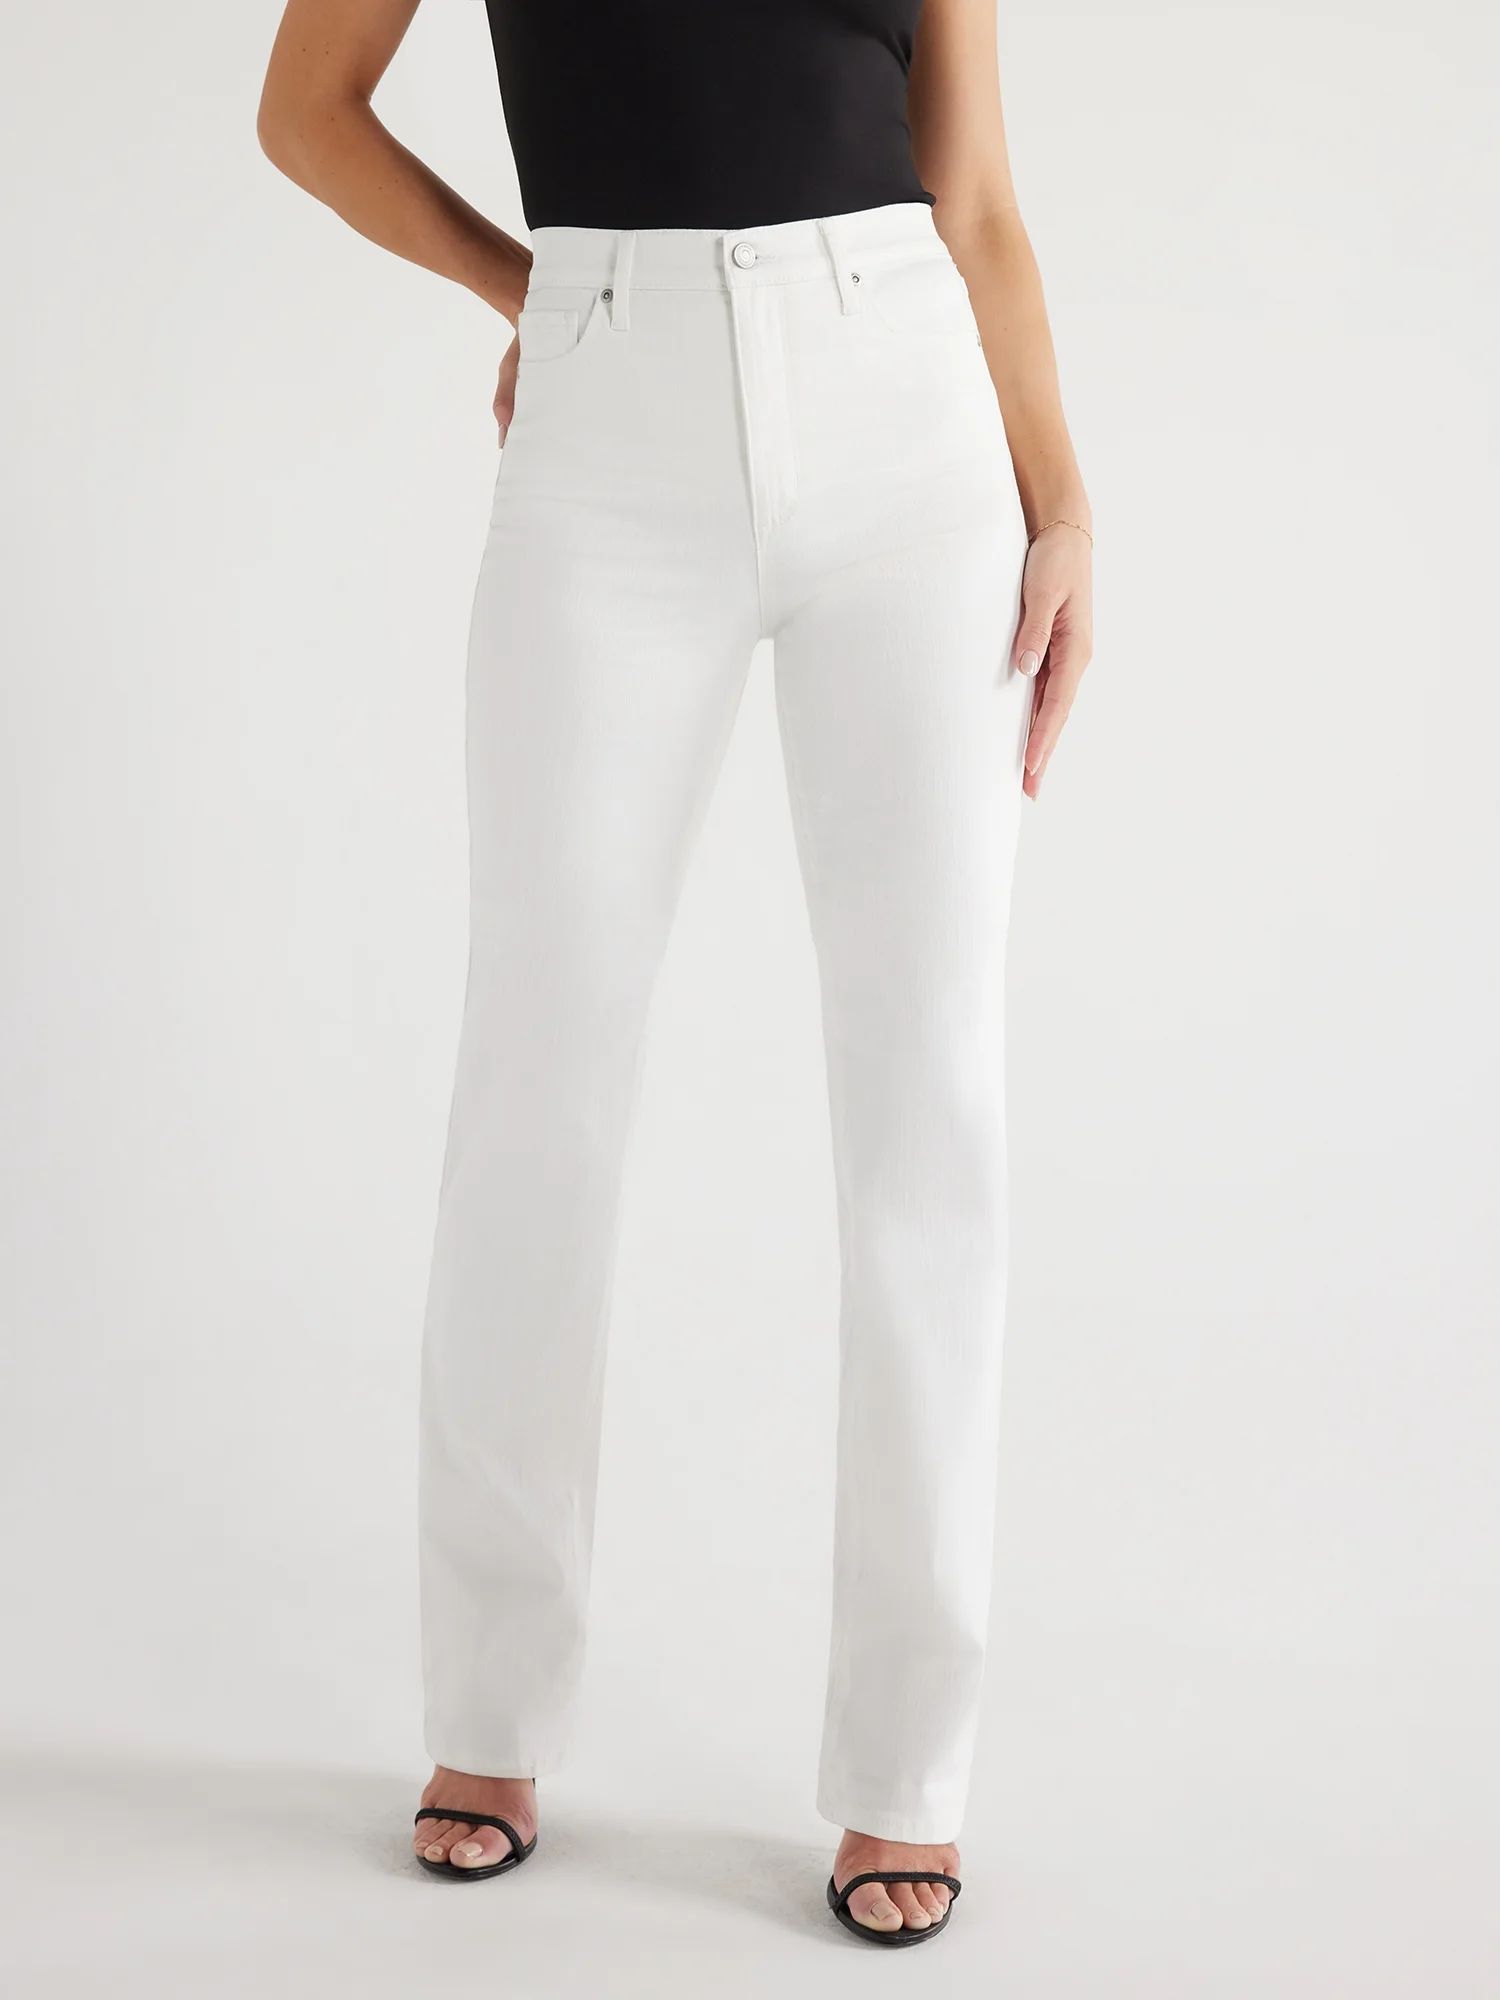 Sofia Jeans Women's Eden Slim Straight Super High-Rise Jeans, 30.5" Inseam, Sizes 0-20 | Walmart (US)